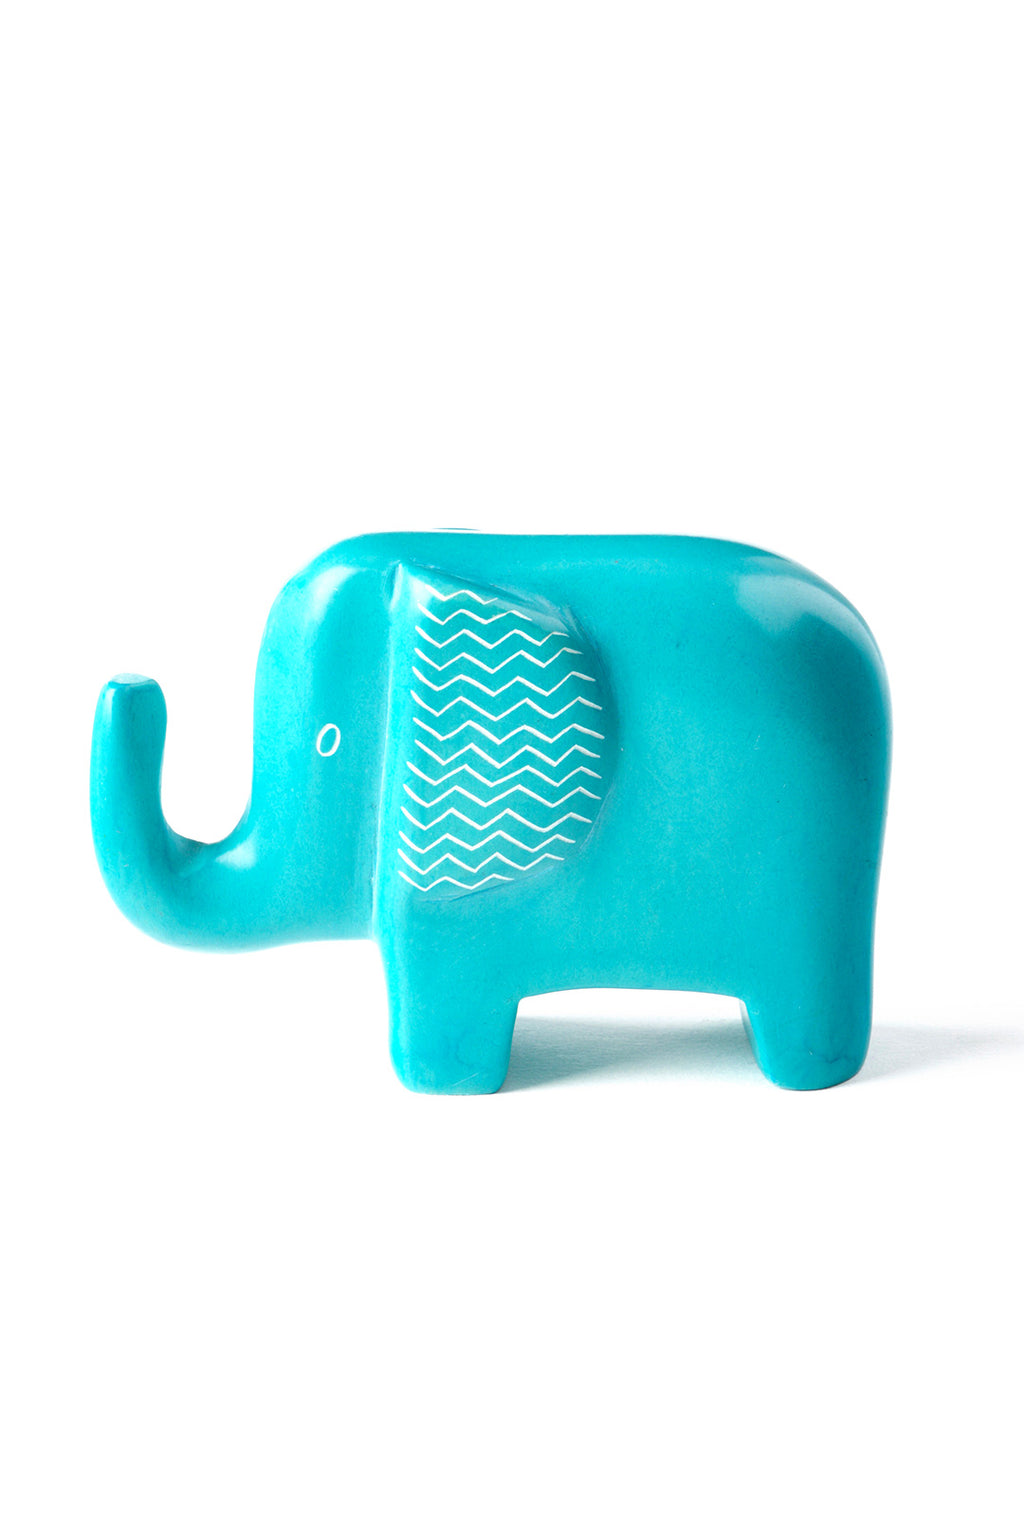 Aqua Blue Bashful Zig-Zag Elephant Soapstone Sculptures RM39C  Small Elephant